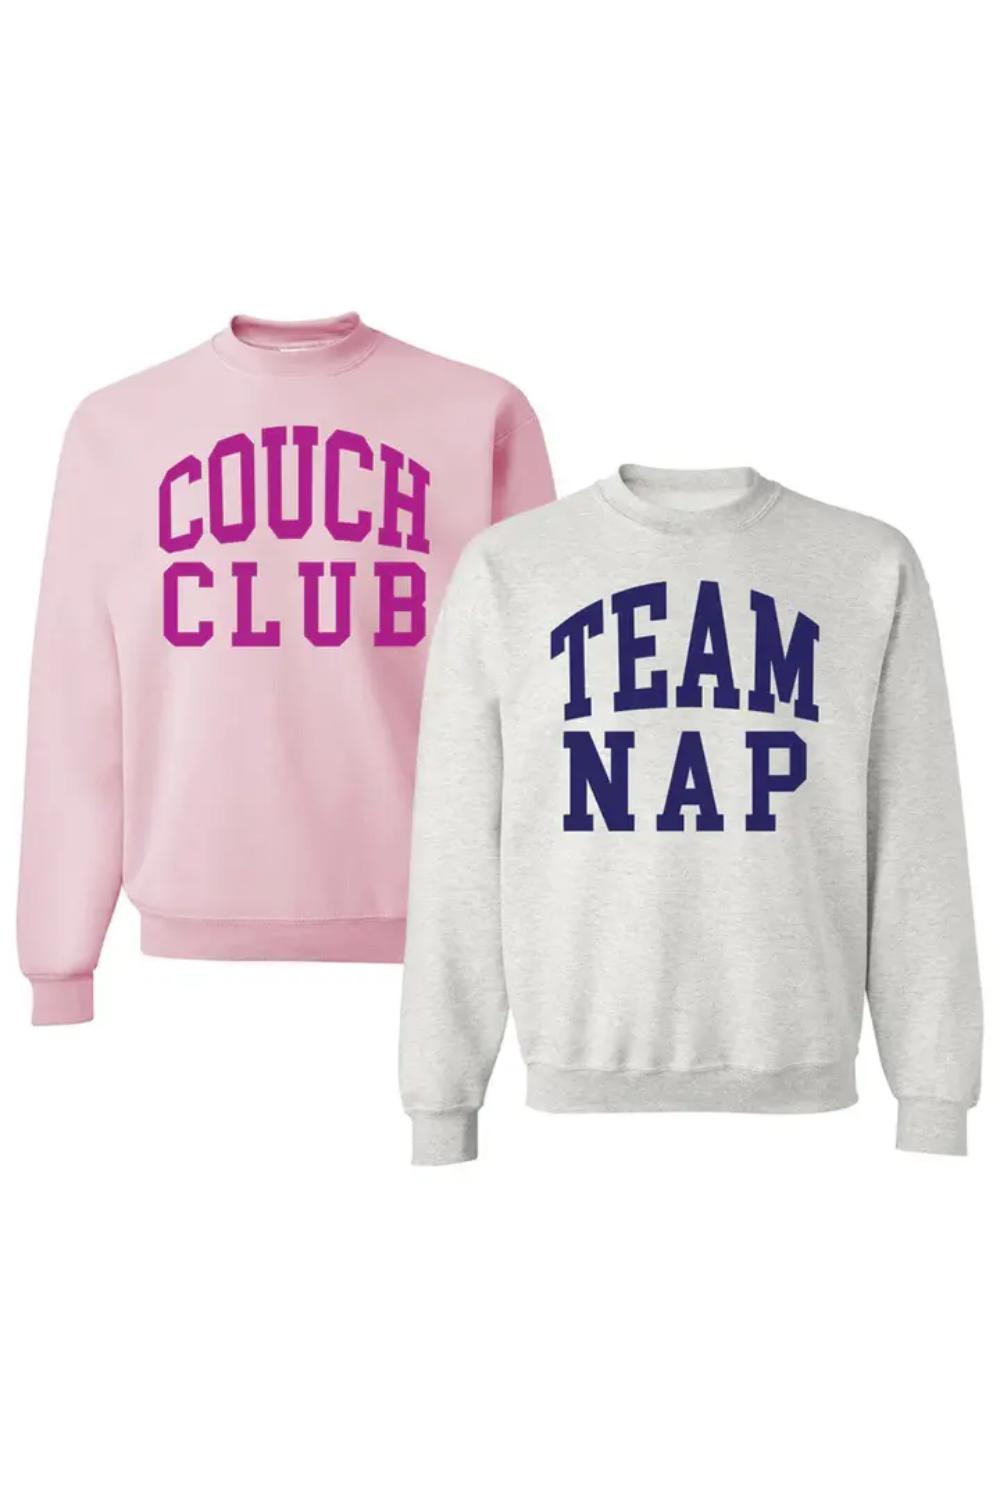 'Team Nap/Couch Club' Crewneck Sweatshirt - Mindy Mae's Marketcomfy cute hoodies